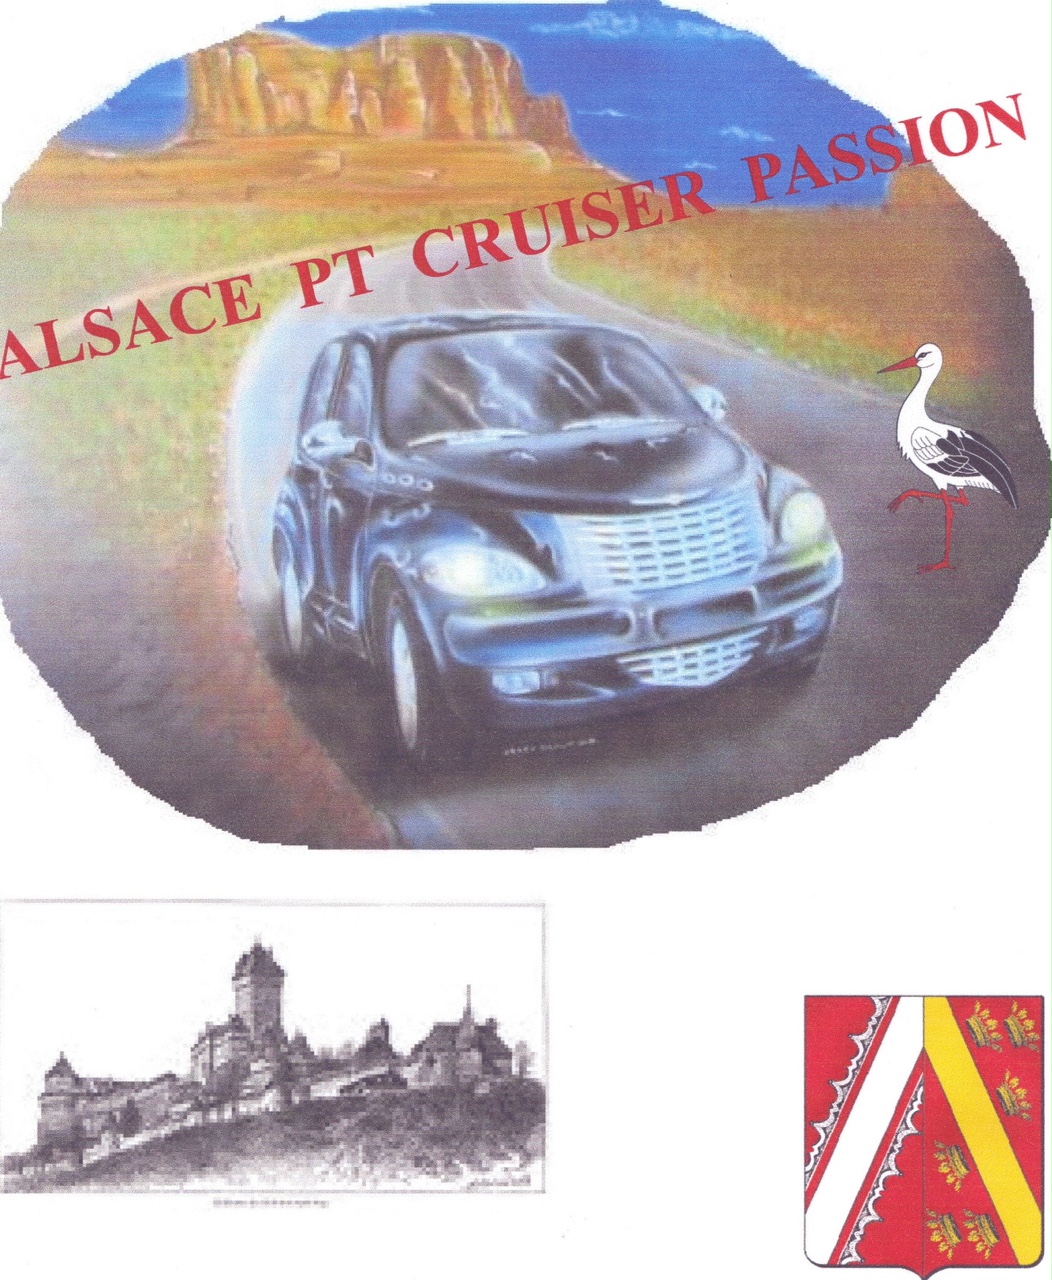 Alsace PT Cruiser Passion